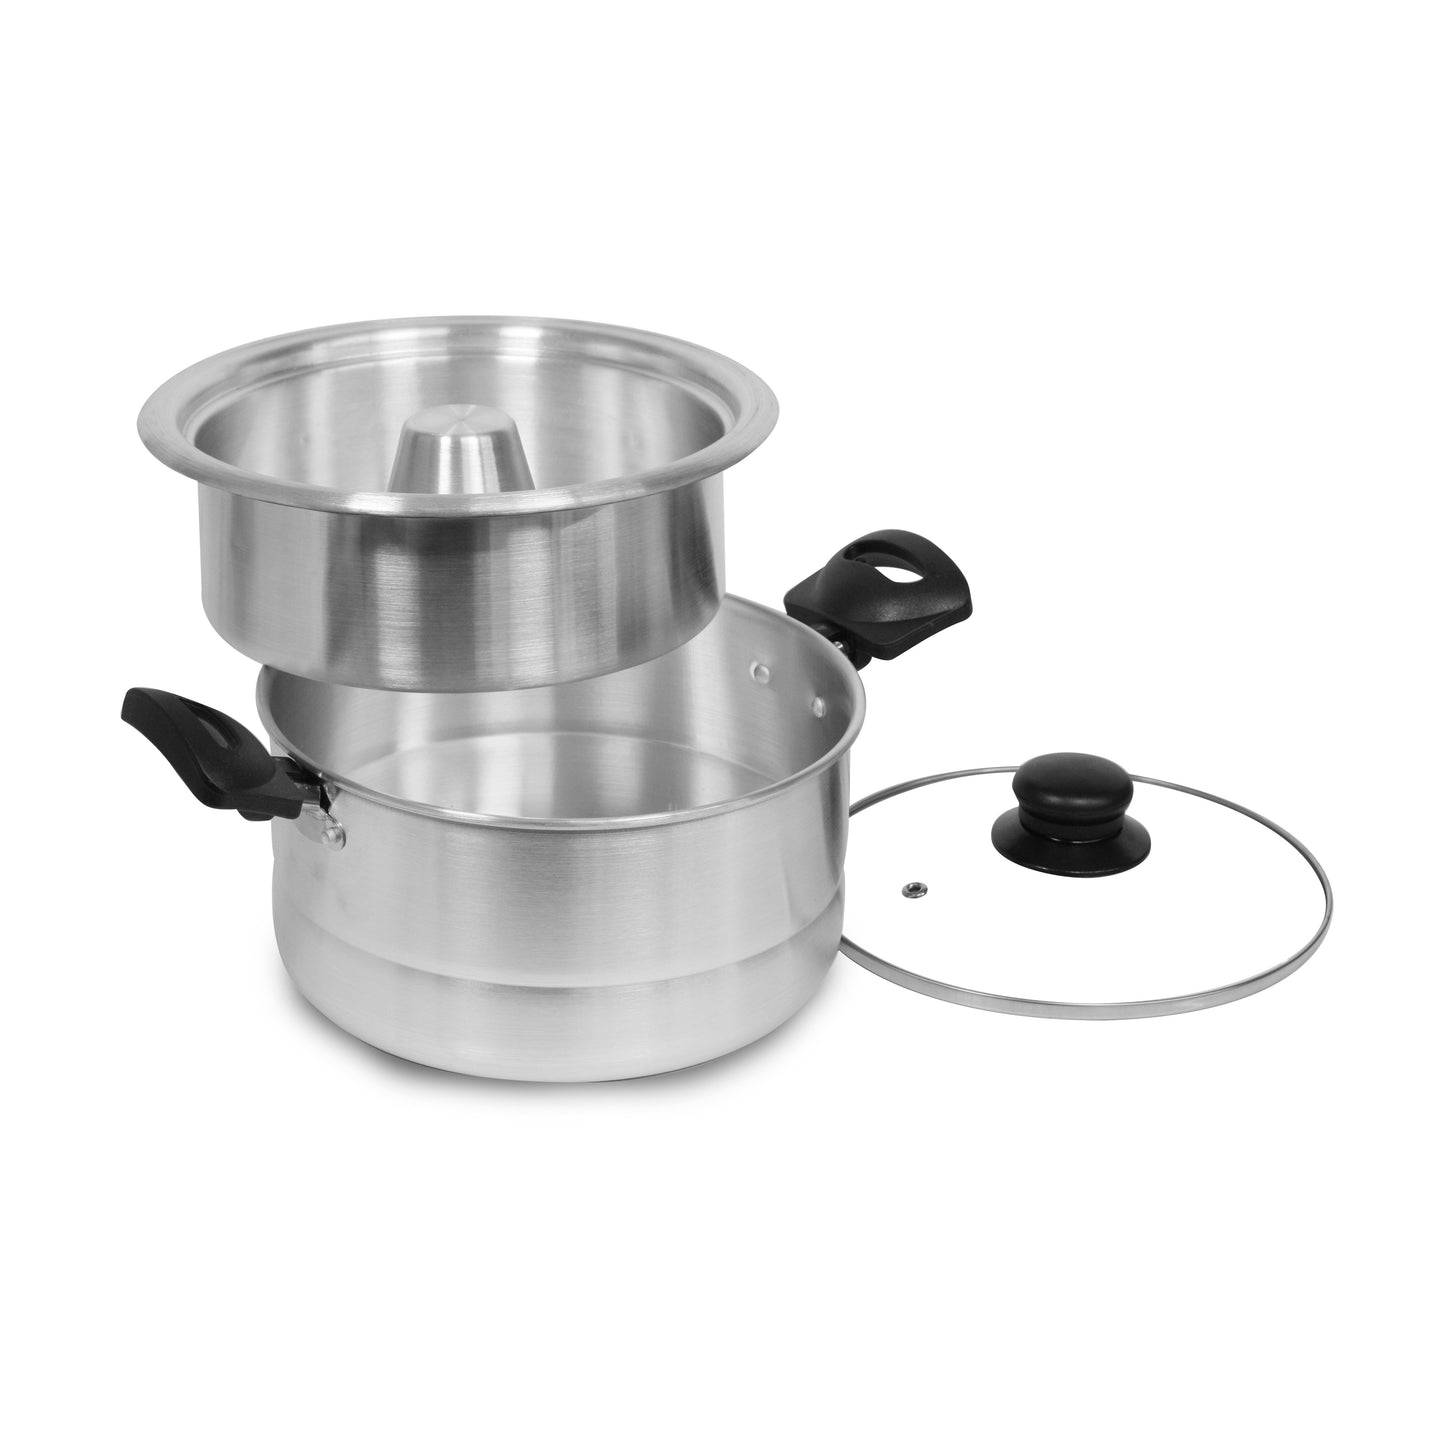 Kitchen Stainless Steel Double Boiler Pot - Steel Heat Resistant